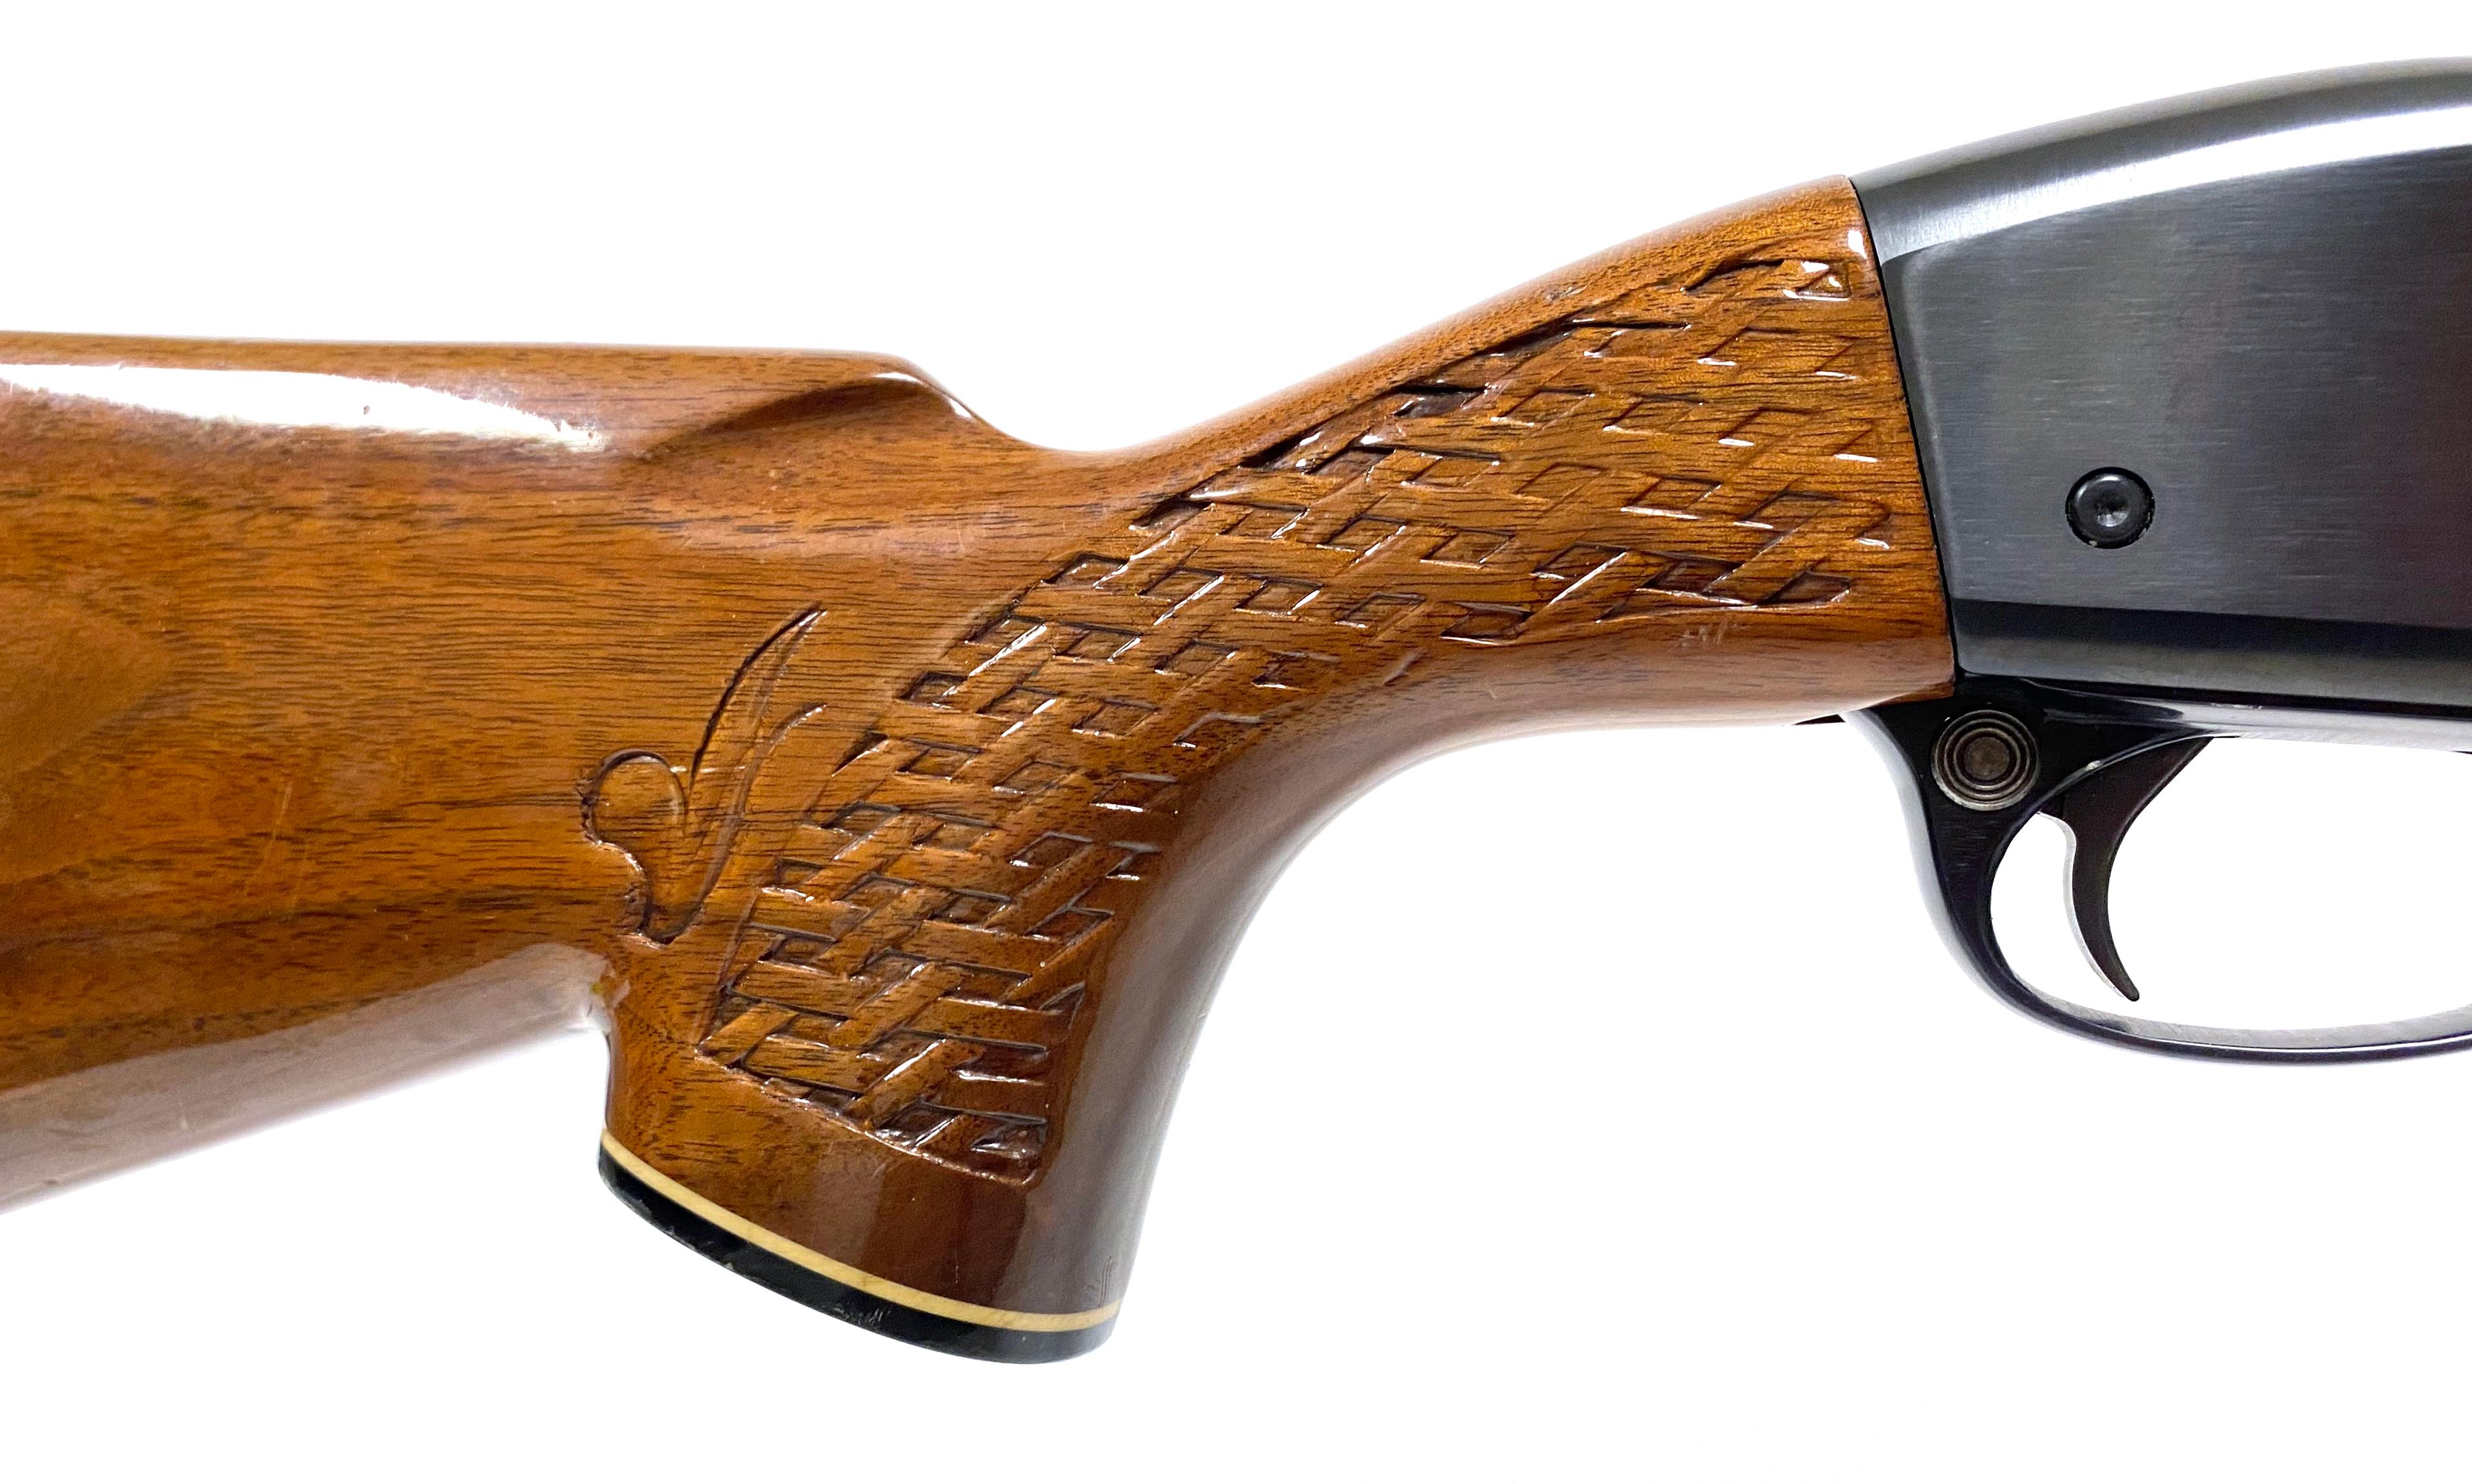 Excellent 1975 Remington Woodsmaster Model 742 .30-06 SPRG. Semi-Automatic Magazine Rifle